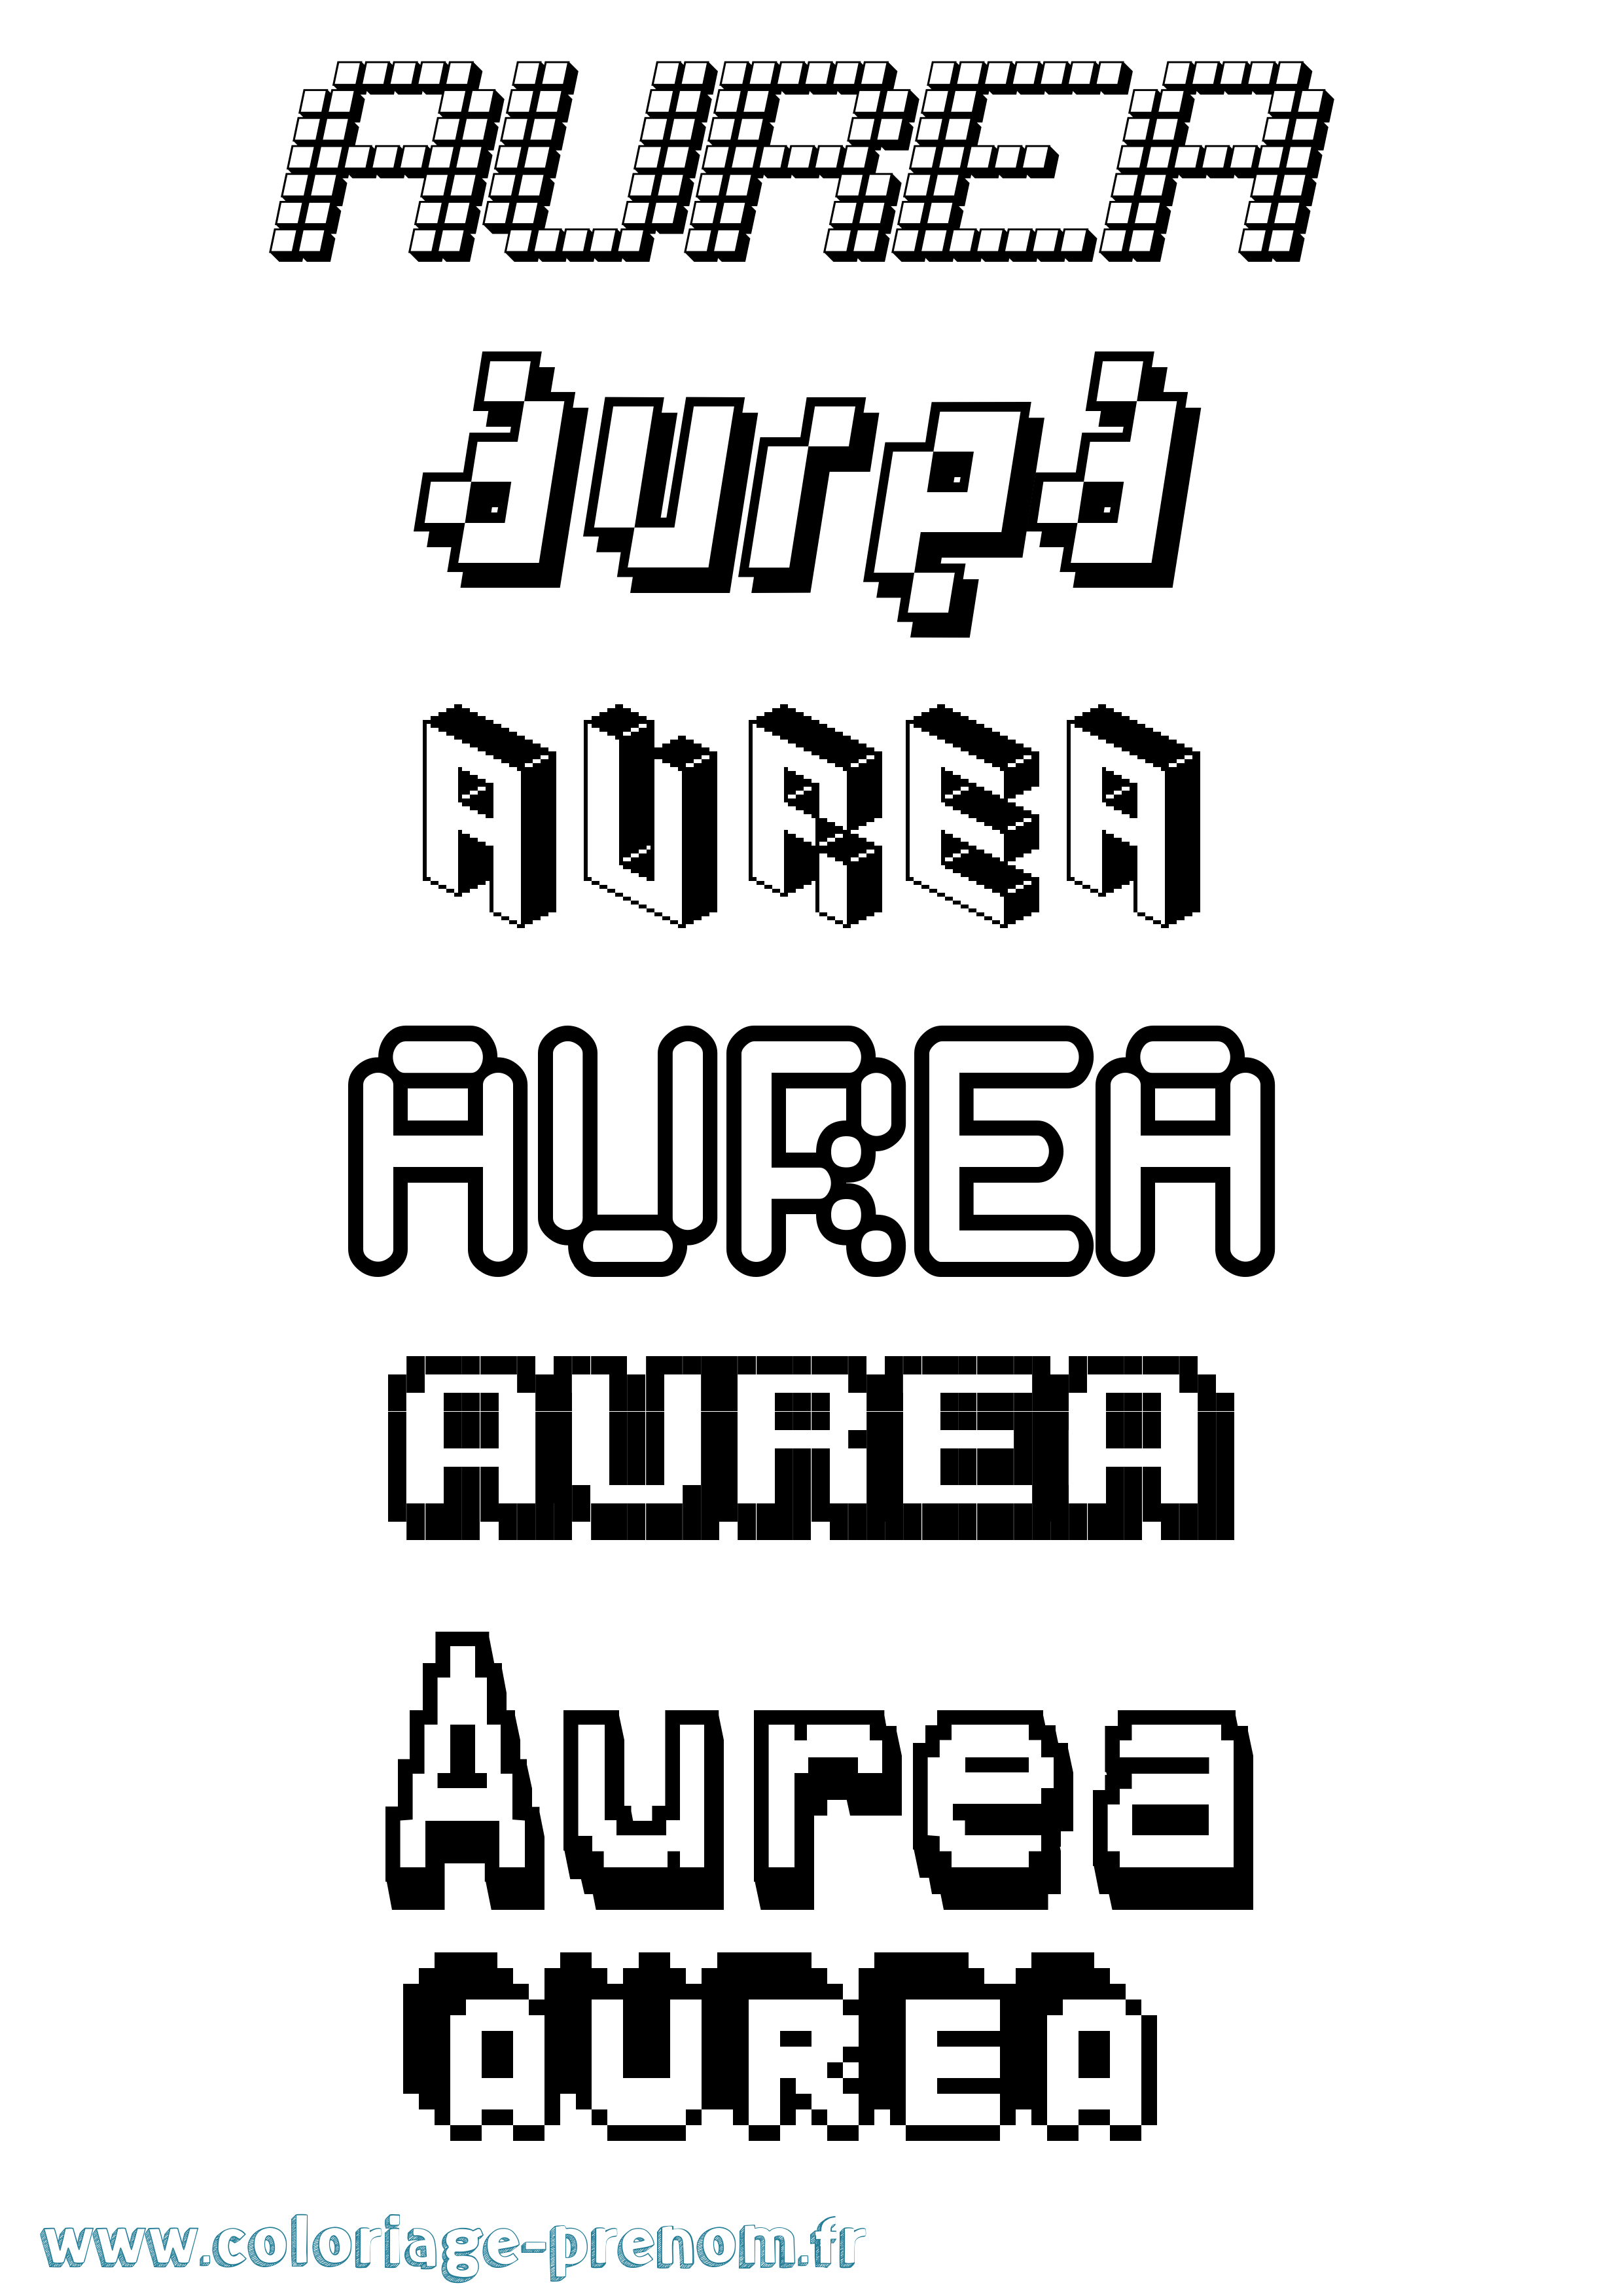 Coloriage prénom Aurea Pixel